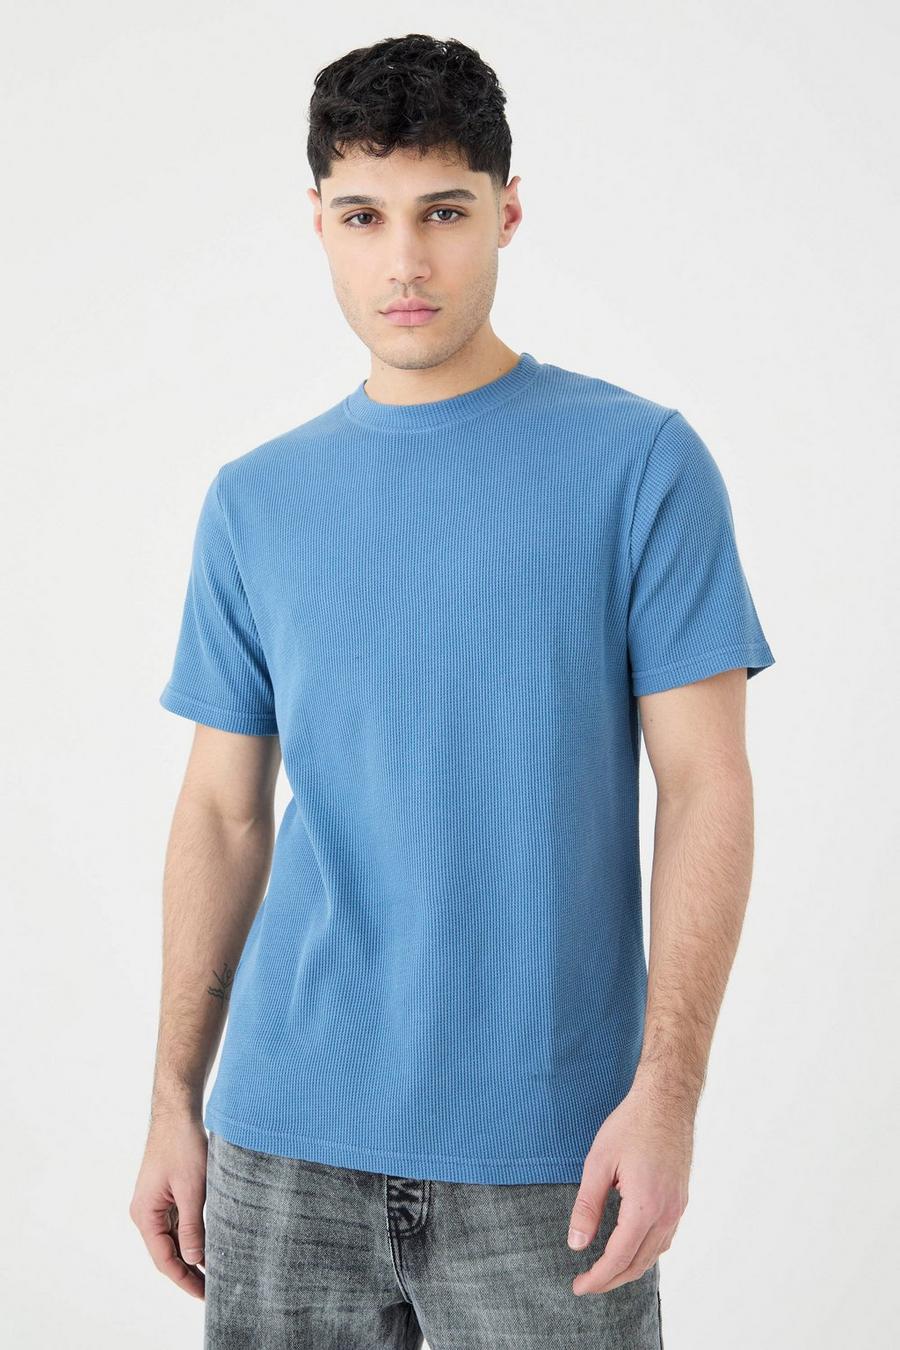 Slate blue Wafel Gebreid Slim Fit T-Shirt image number 1